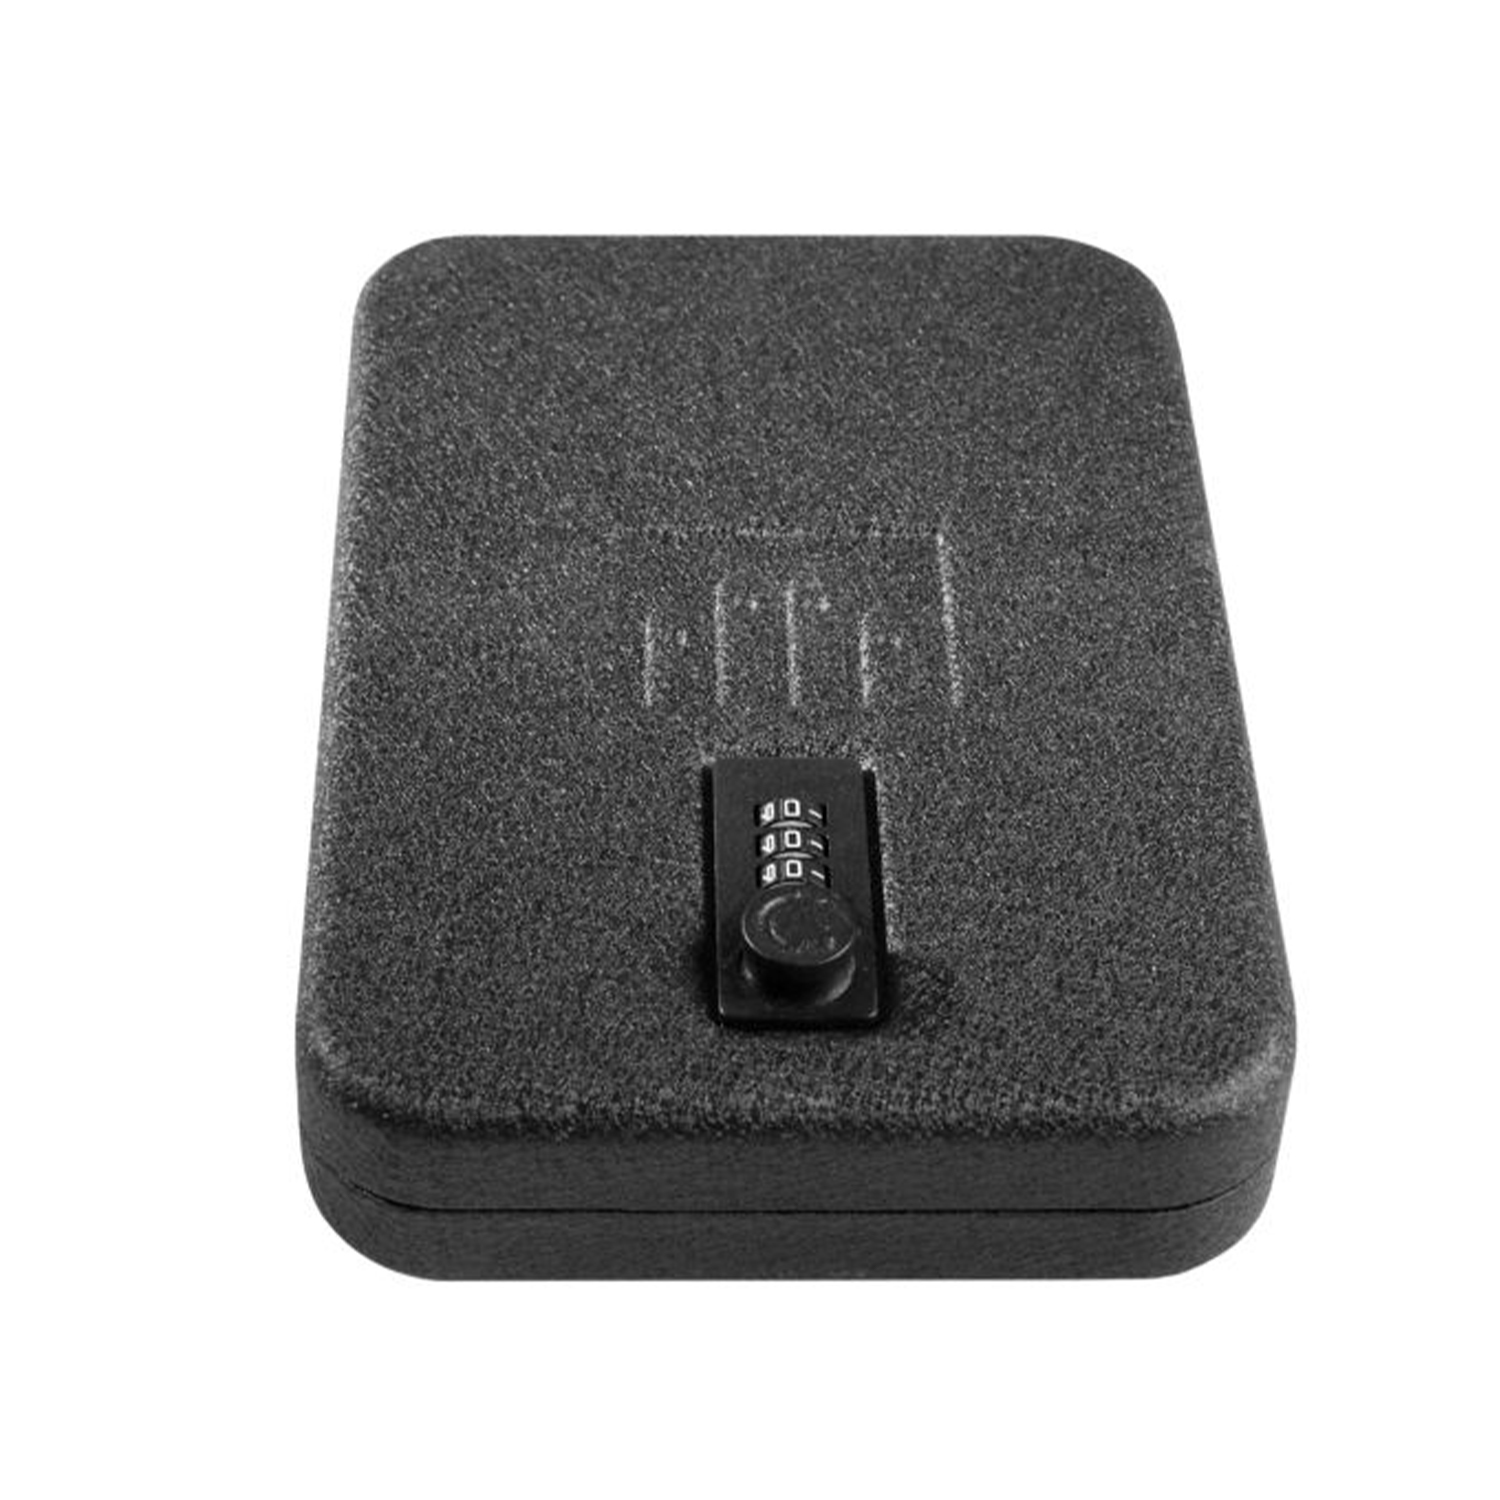 GunVault NanoVault 300 TSA Approved Compact Portable Travel Lock Gun Safe - image 4 of 5